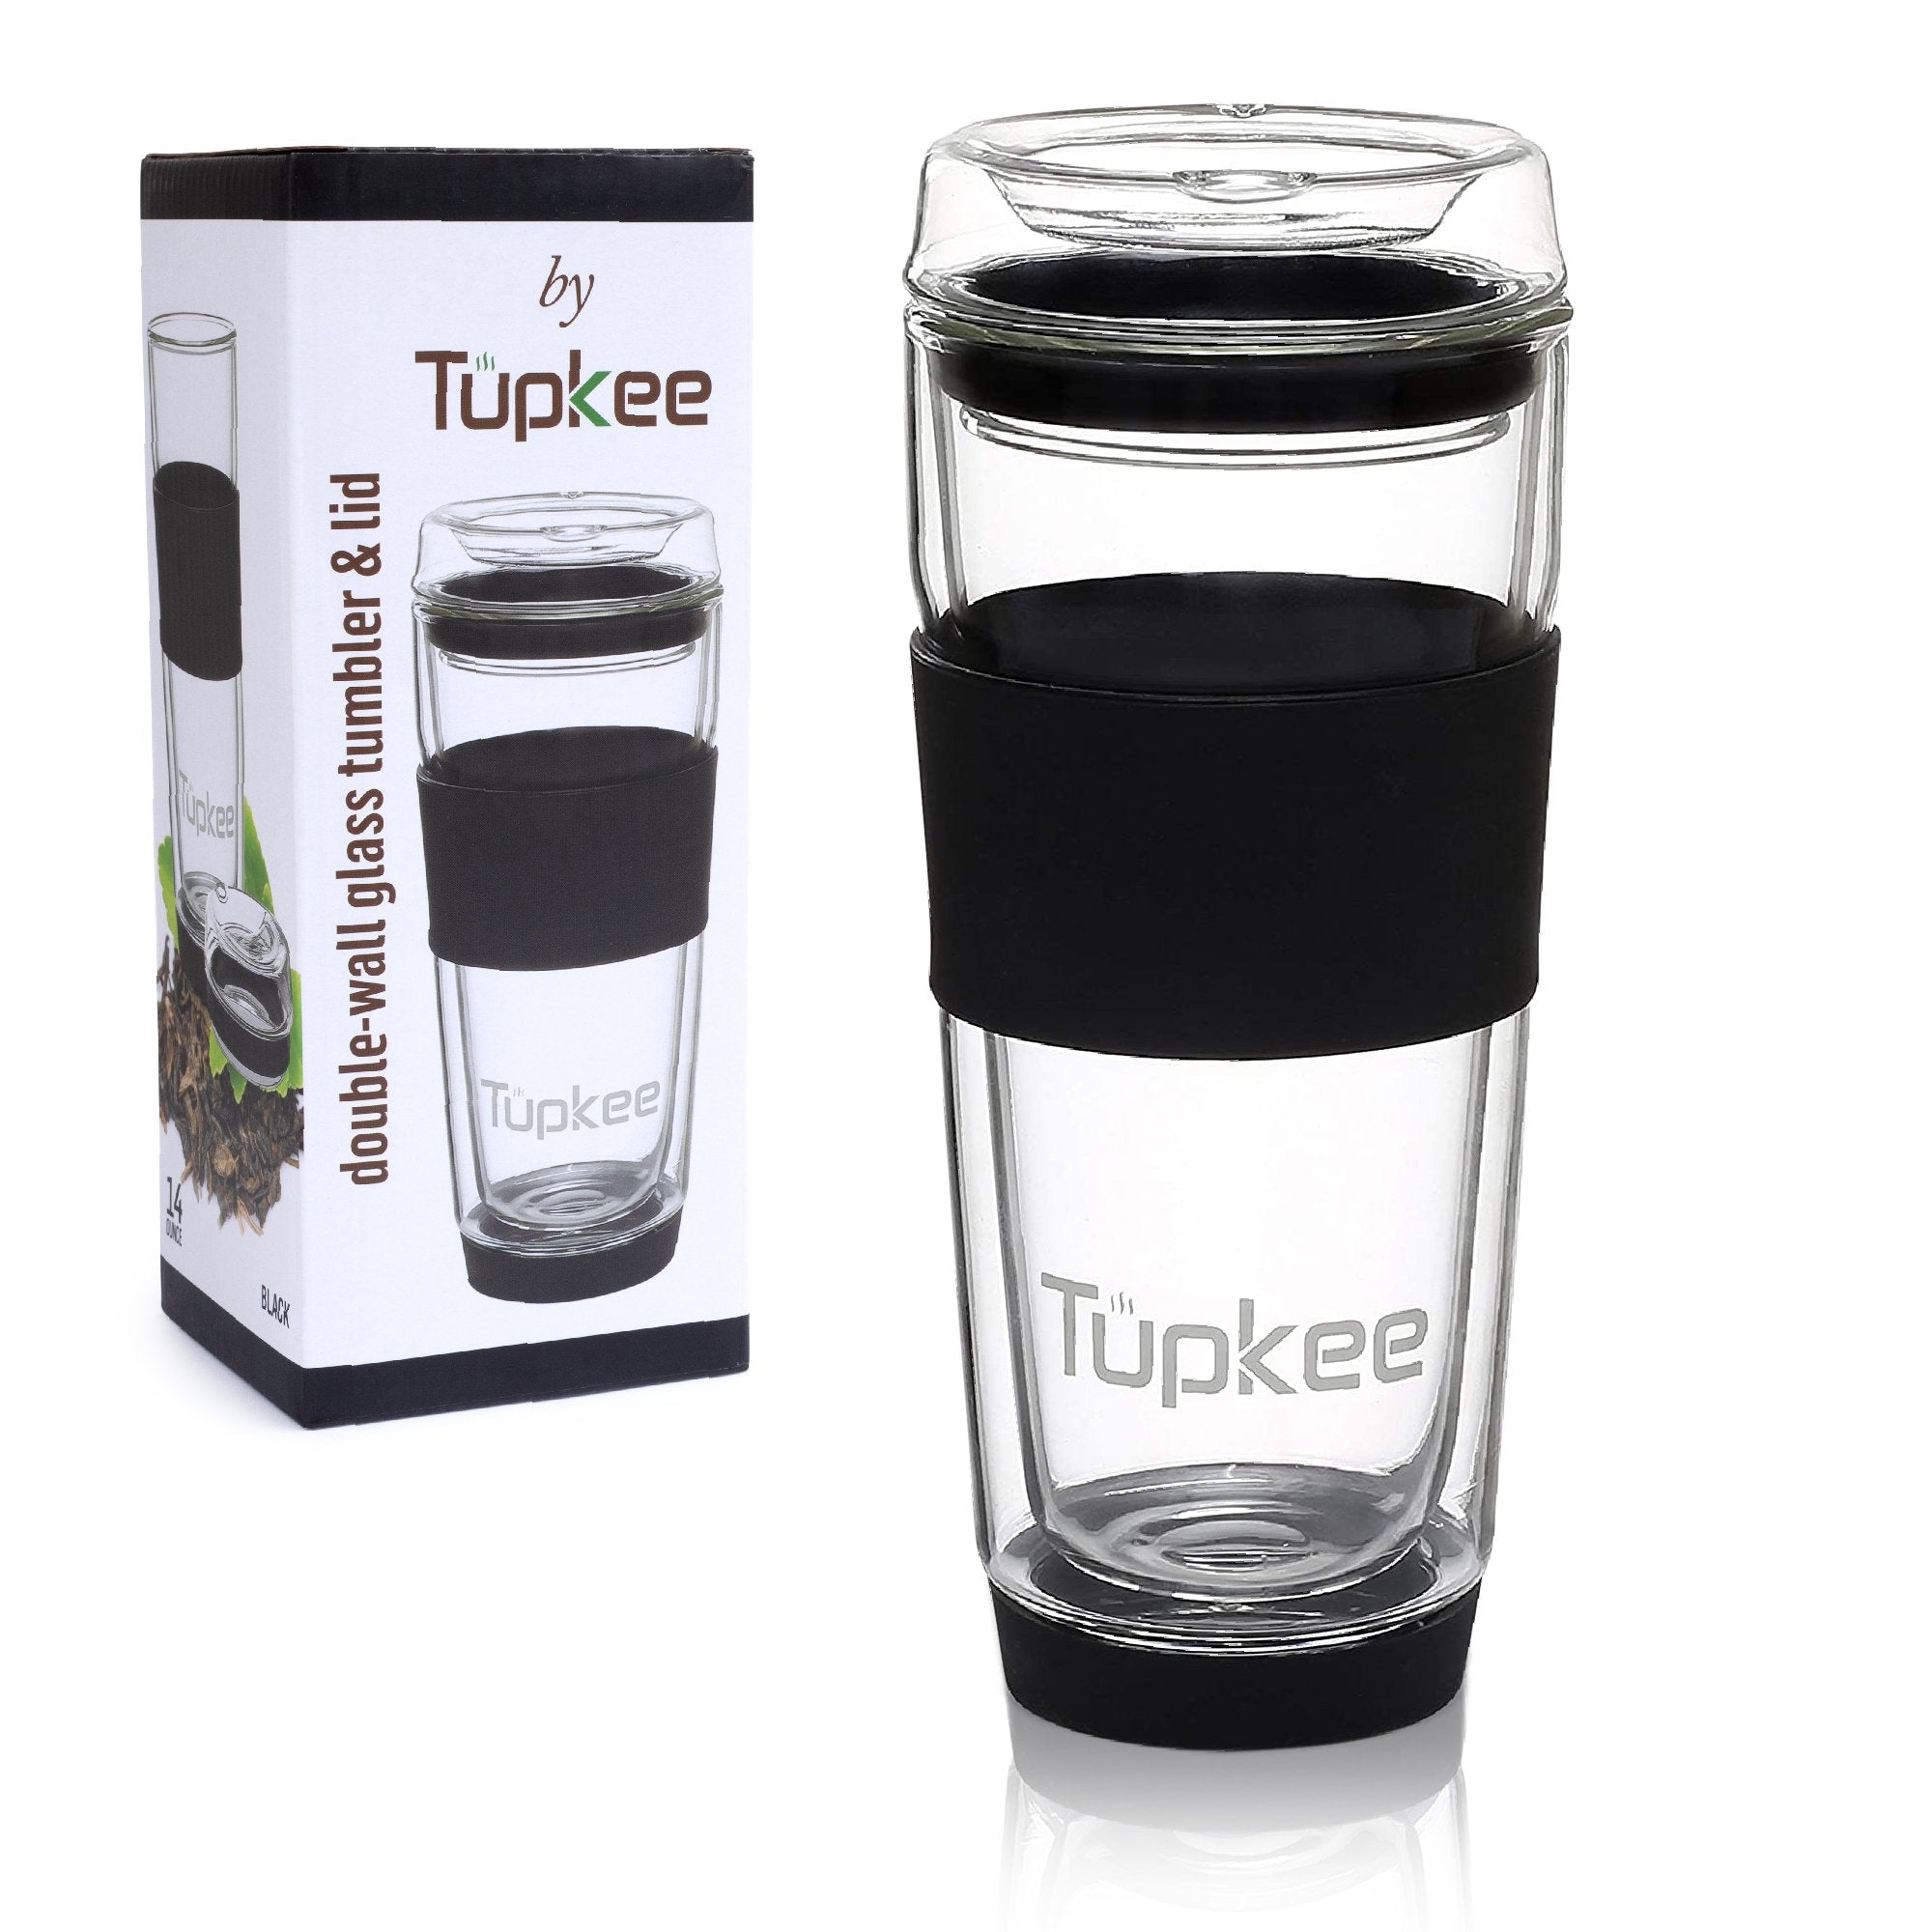 Tupkee Double Wall Glass Tumbler - 8-Ounce, All Glass Reusable Insulated Tea/Coffee Mug & Lid, Hand Blown Glass Travel Mug - Jacaranda